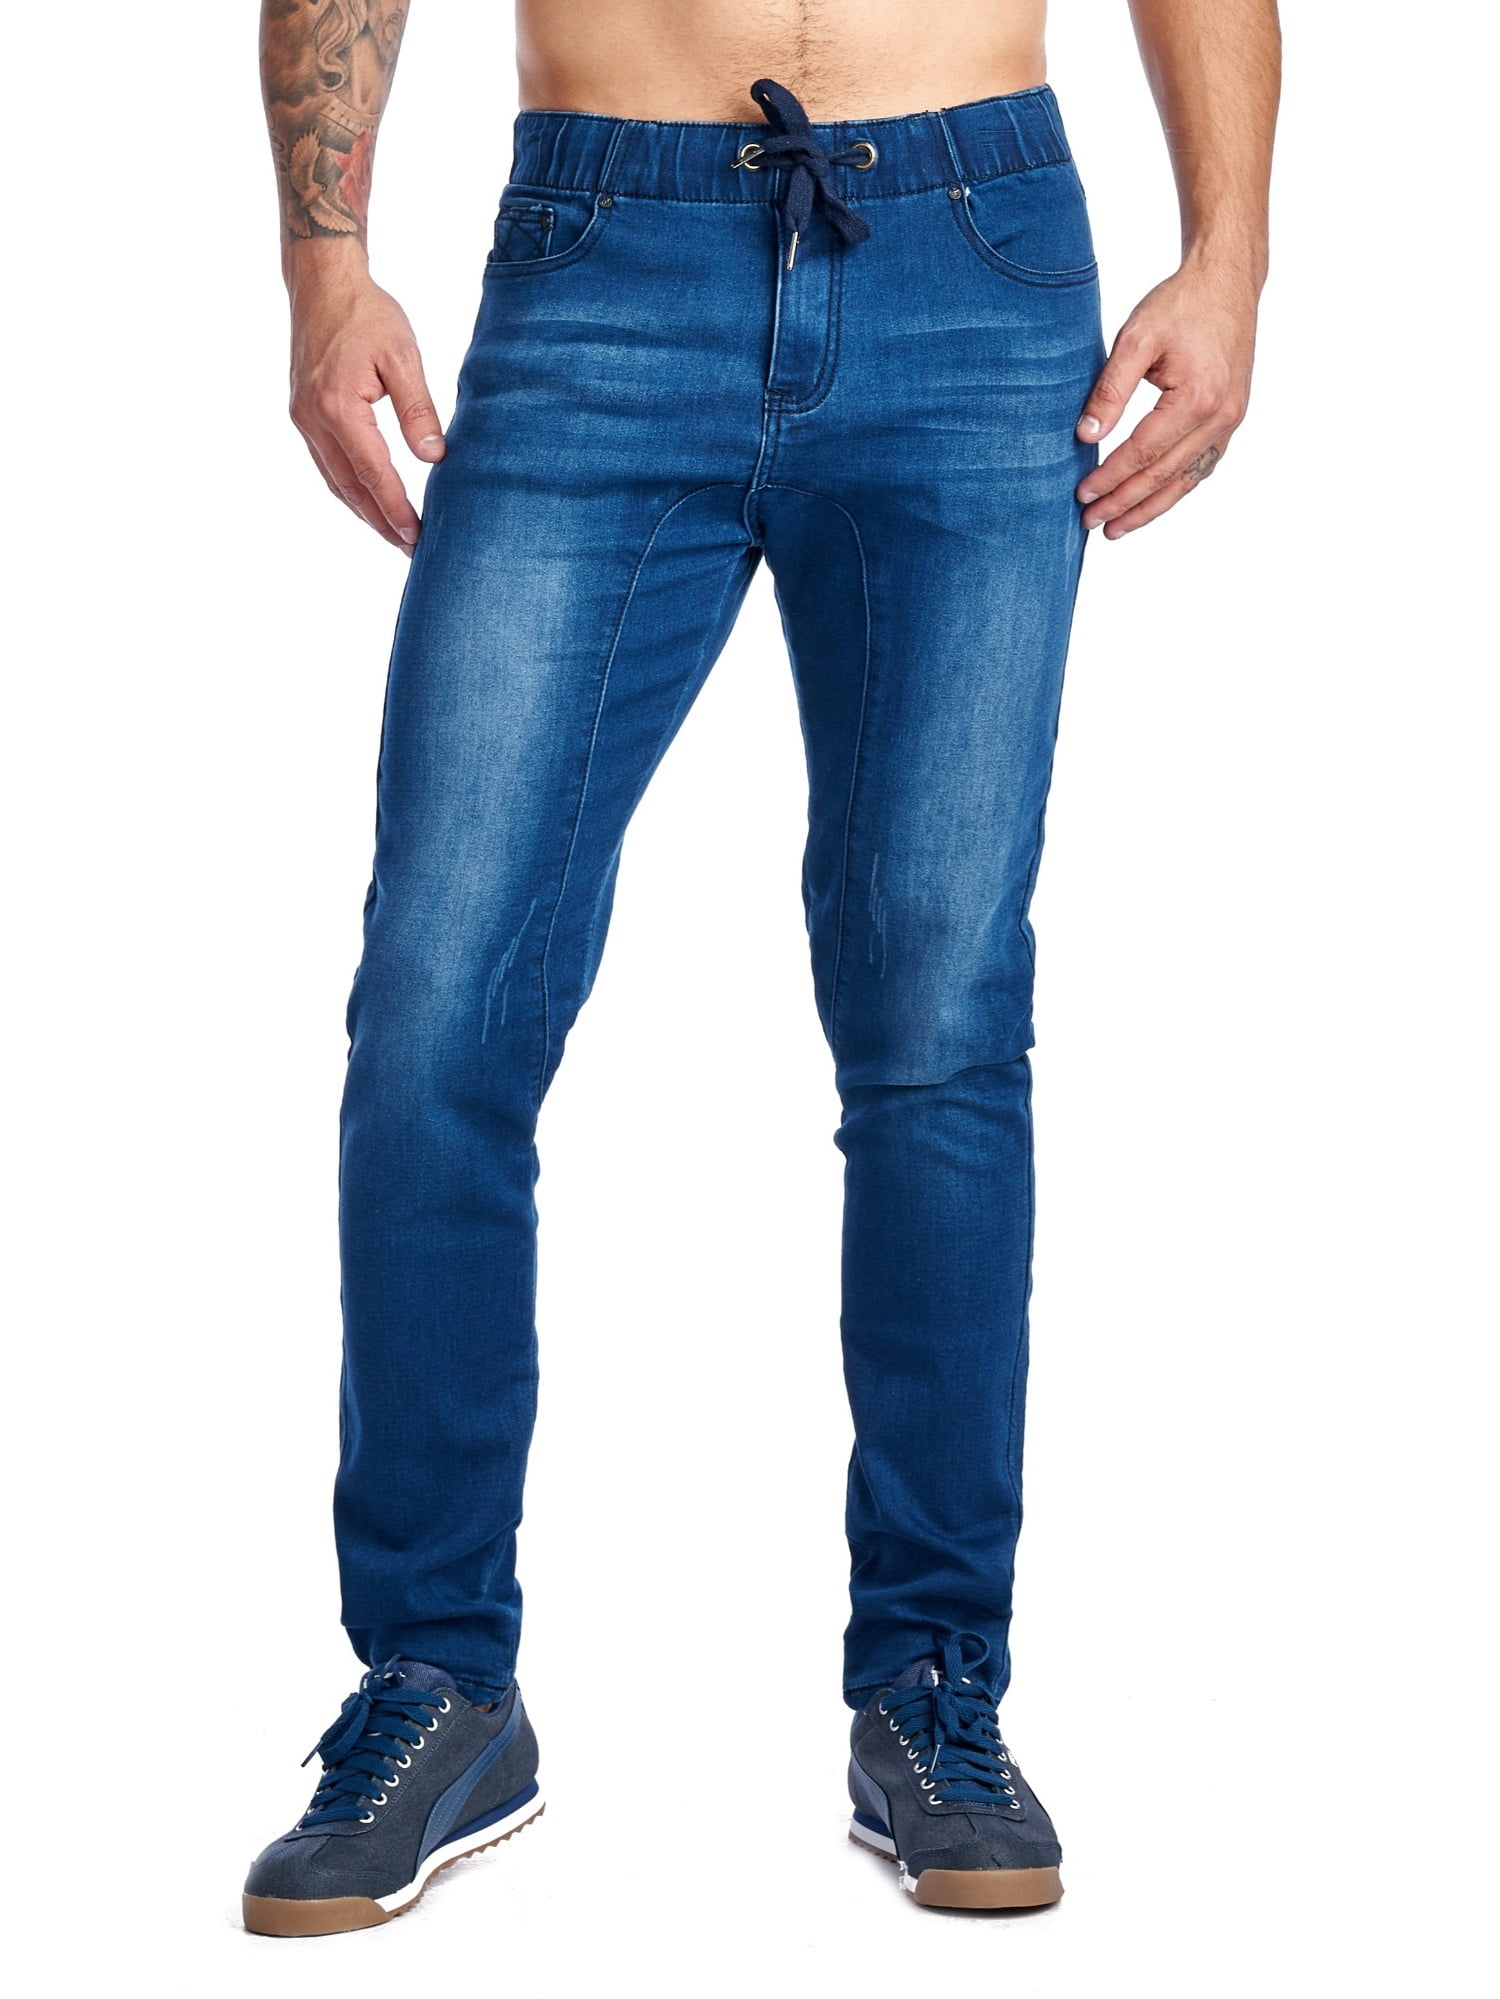 A Jeans - A Jeans Men's Denim Pant Jogger Styling Slim Fit 42124NC ...